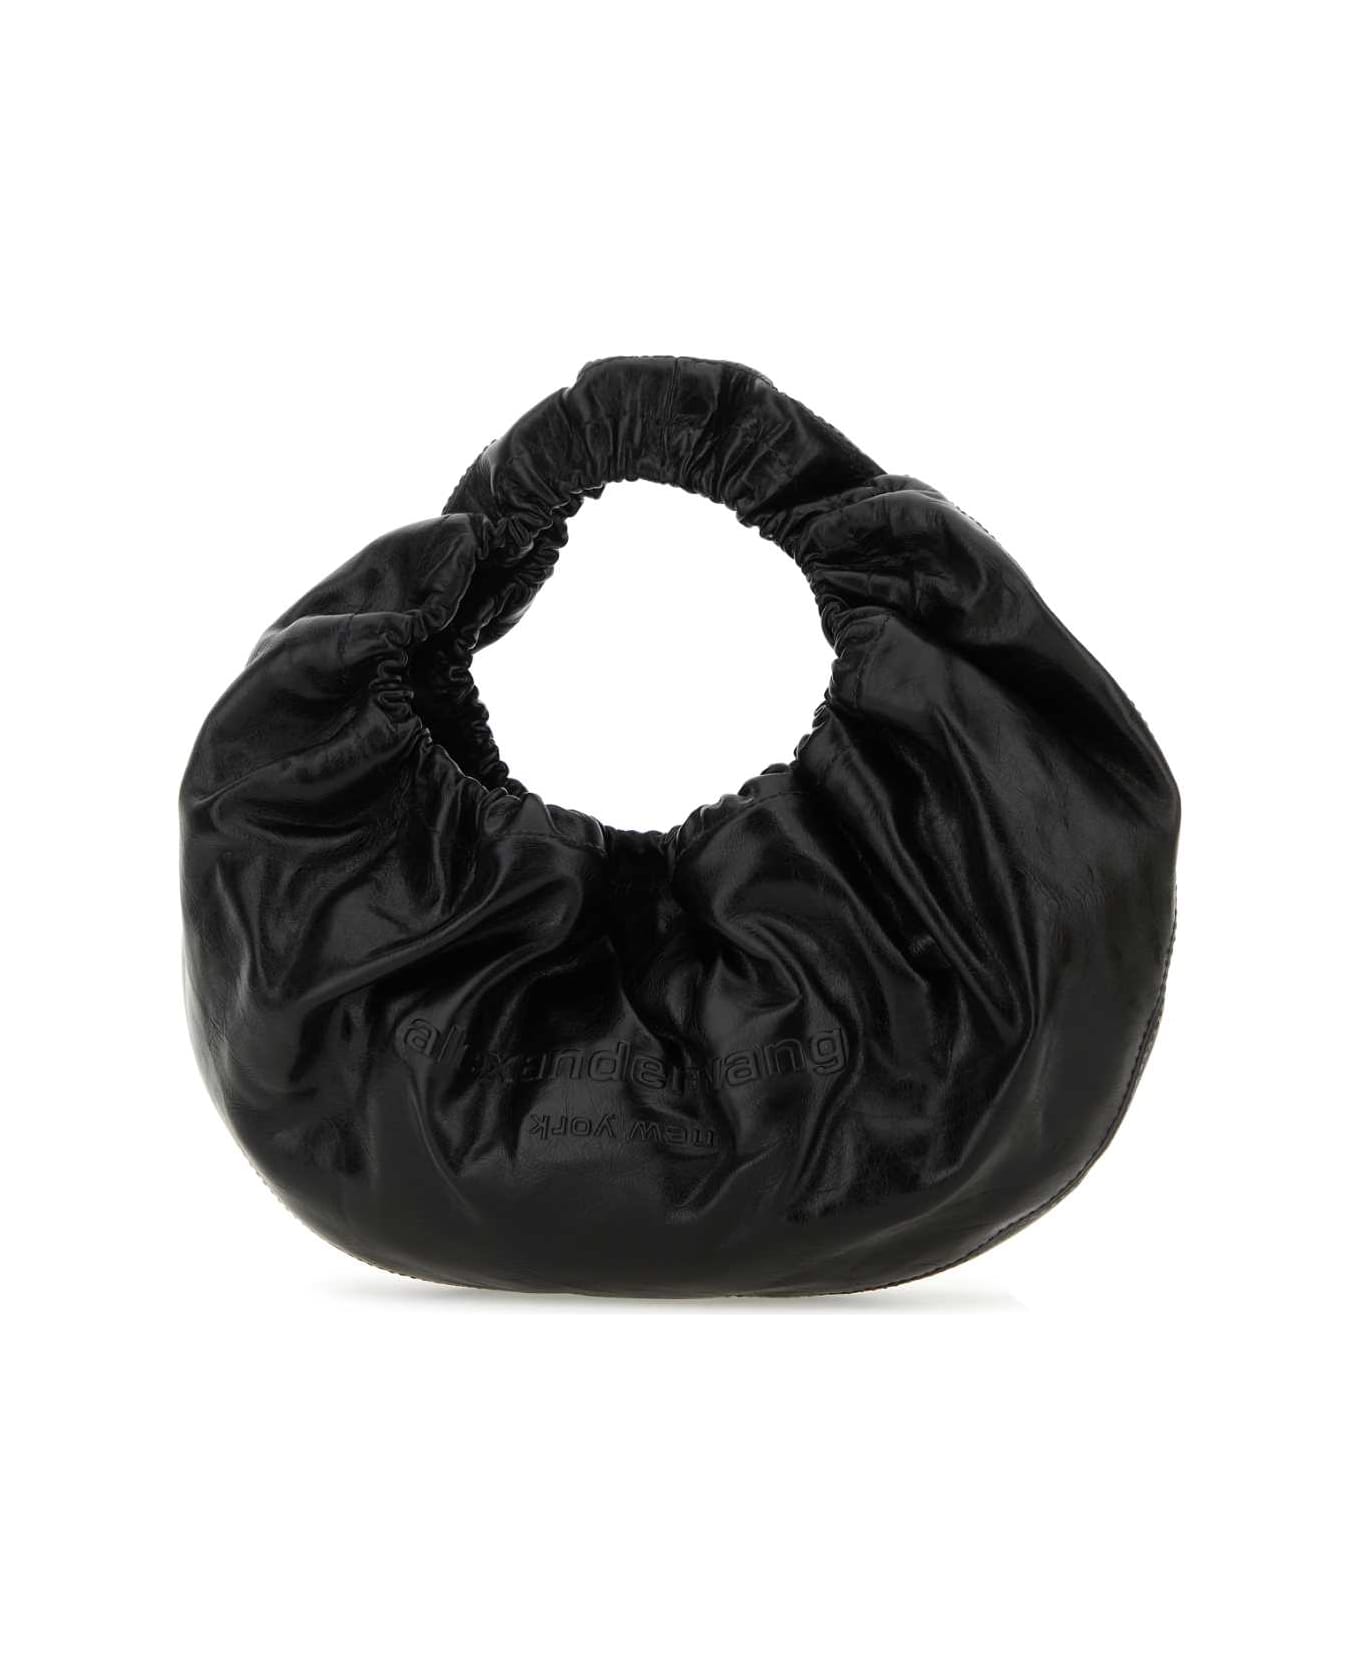 Alexander Wang Black Leather Small Crescent Handbag - BLACK トートバッグ